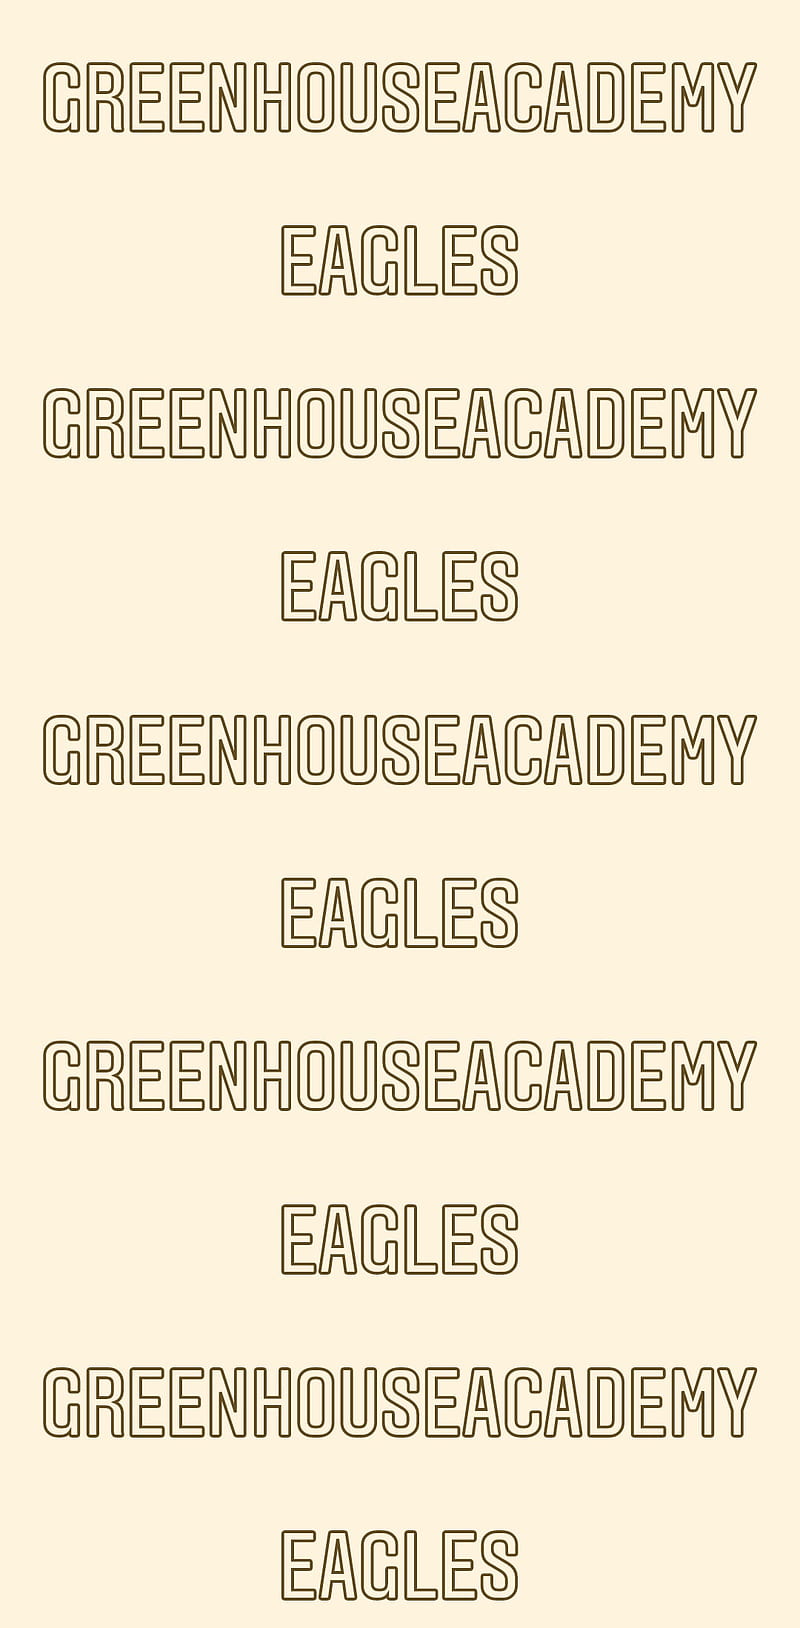 Greenhouse Academy Eagles Greenhouseacademy Ravens Thegreenhouseacademy Hd Phone Wallpaper Peakpx